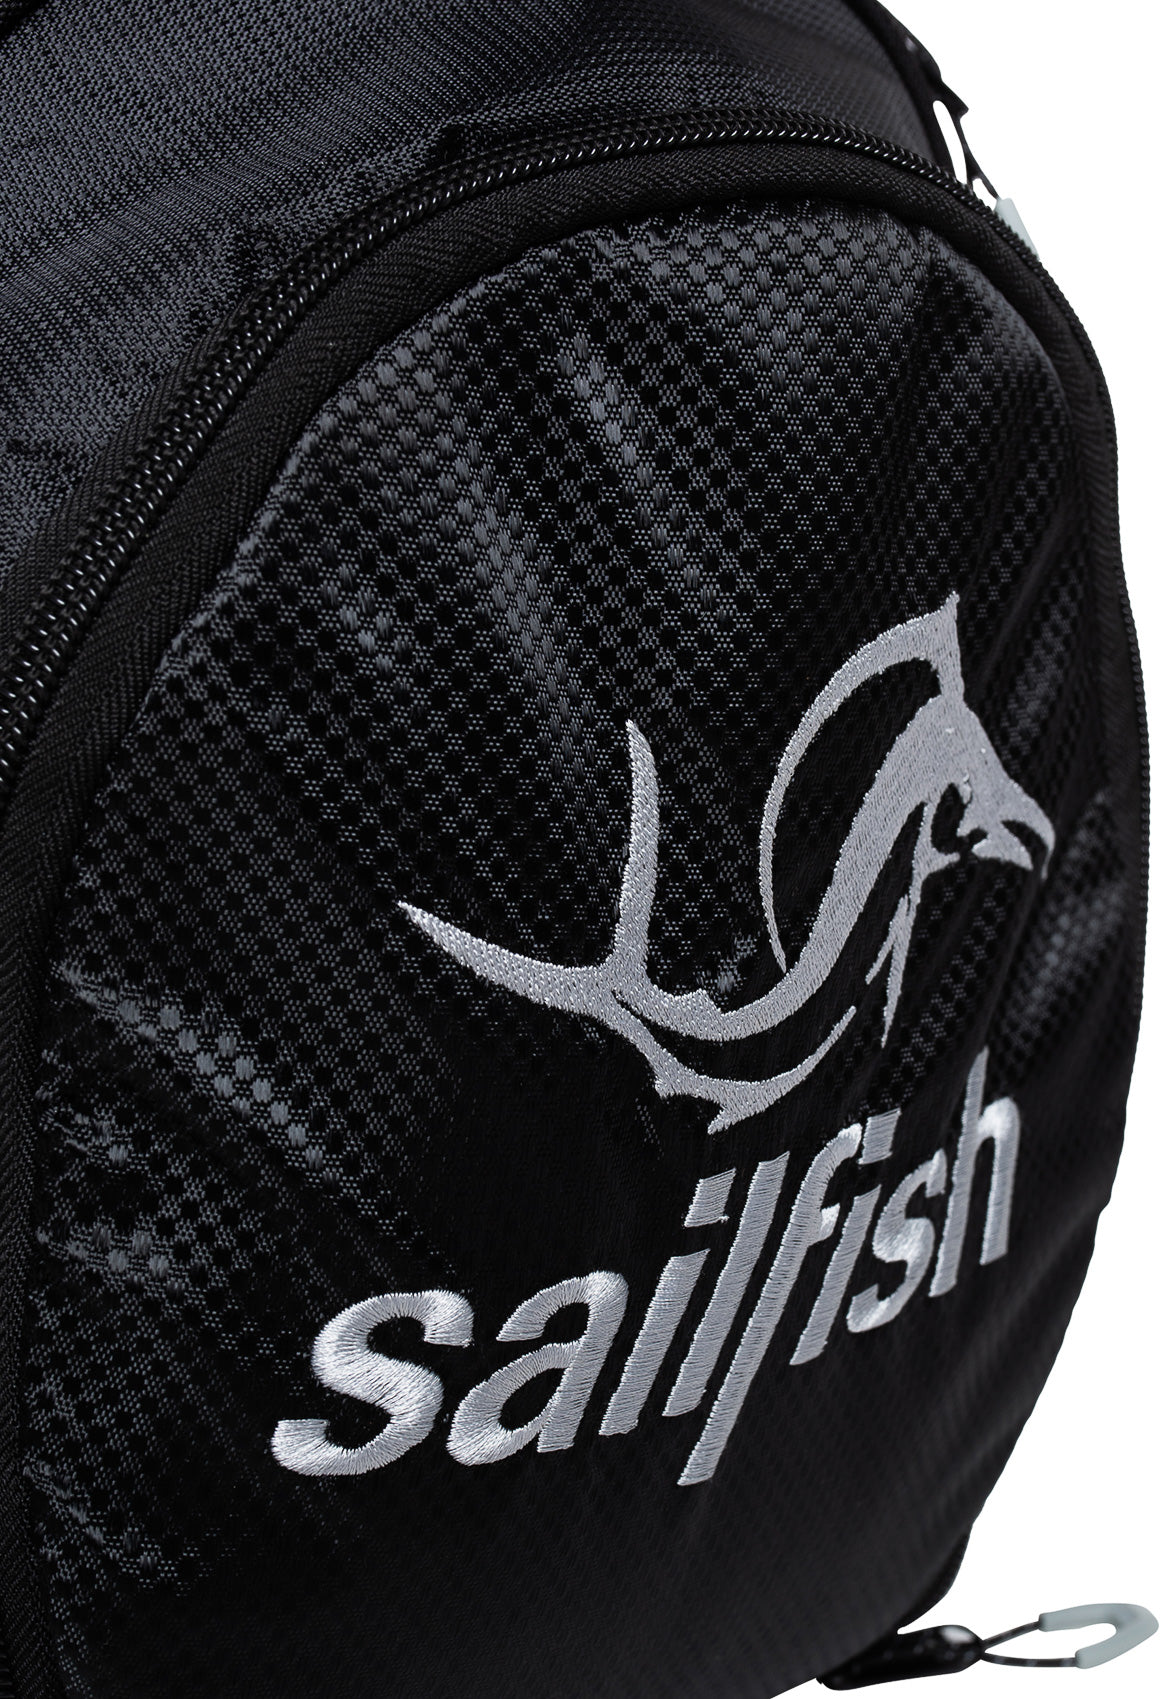 Sailfish Transition Backpack Kona, Rucksack, schwarz